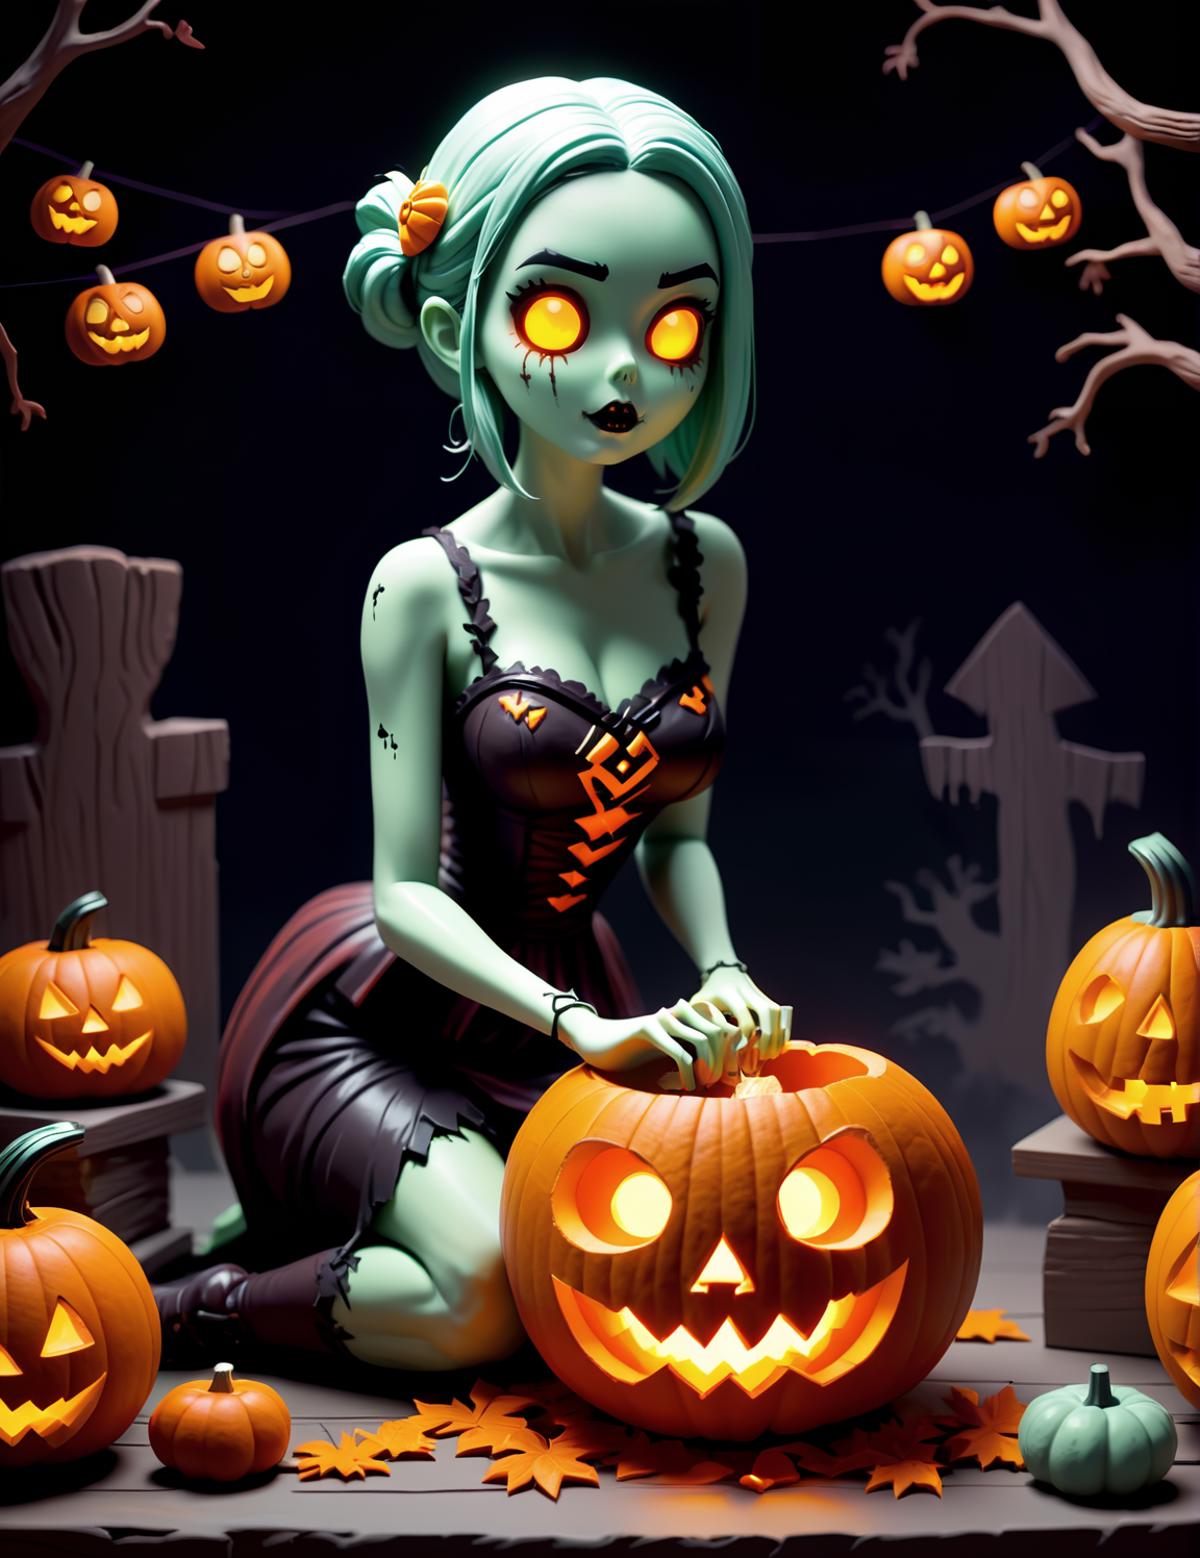 A green-skinned girl sitting among pumpkins.